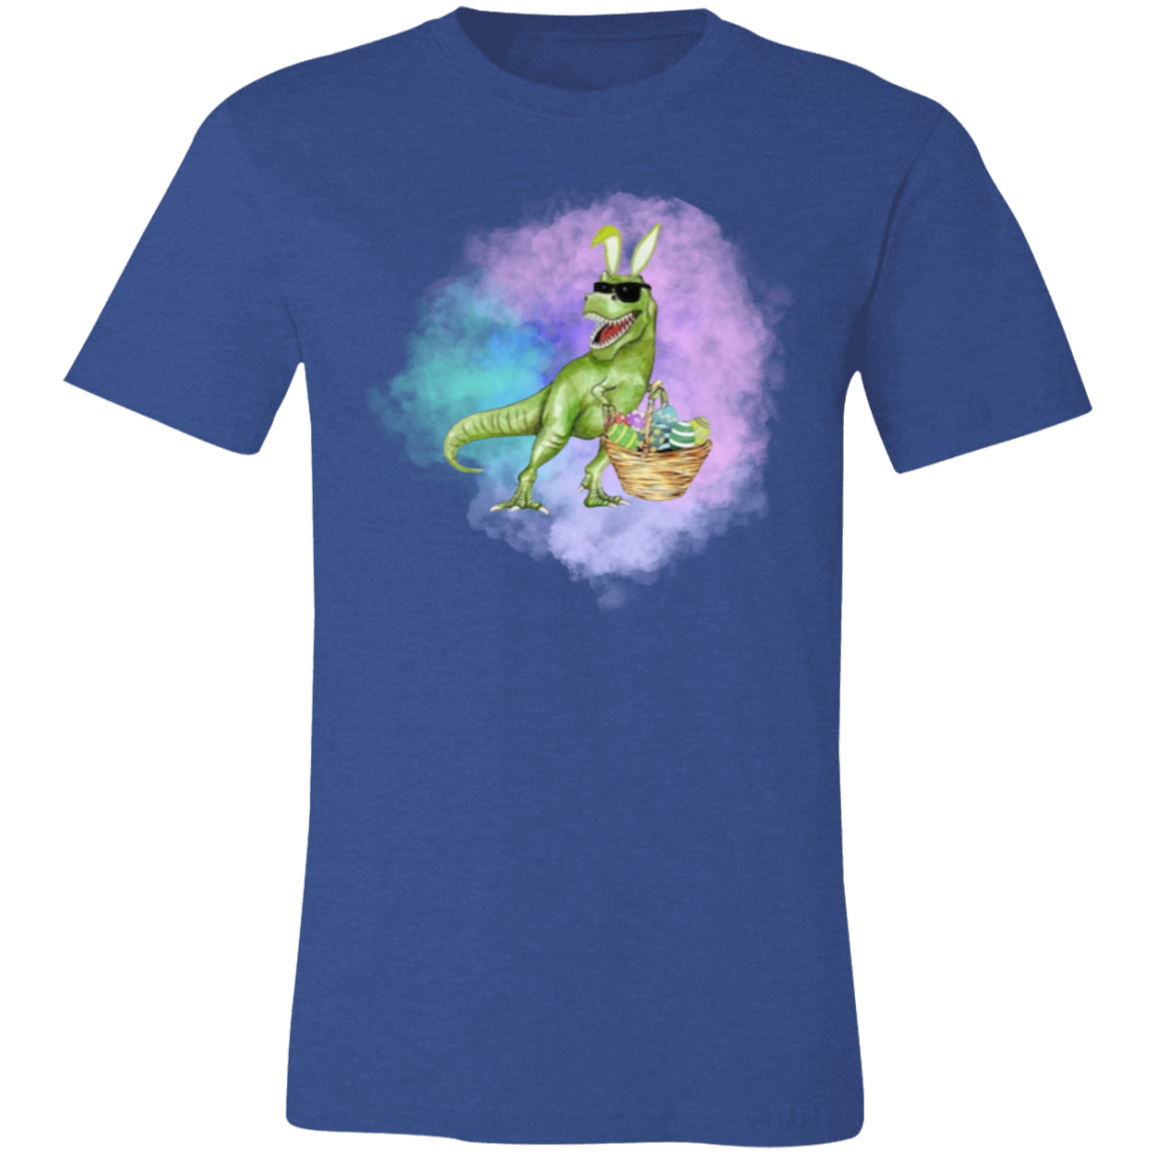 Dinosaur Bunny Easter T-Shirt